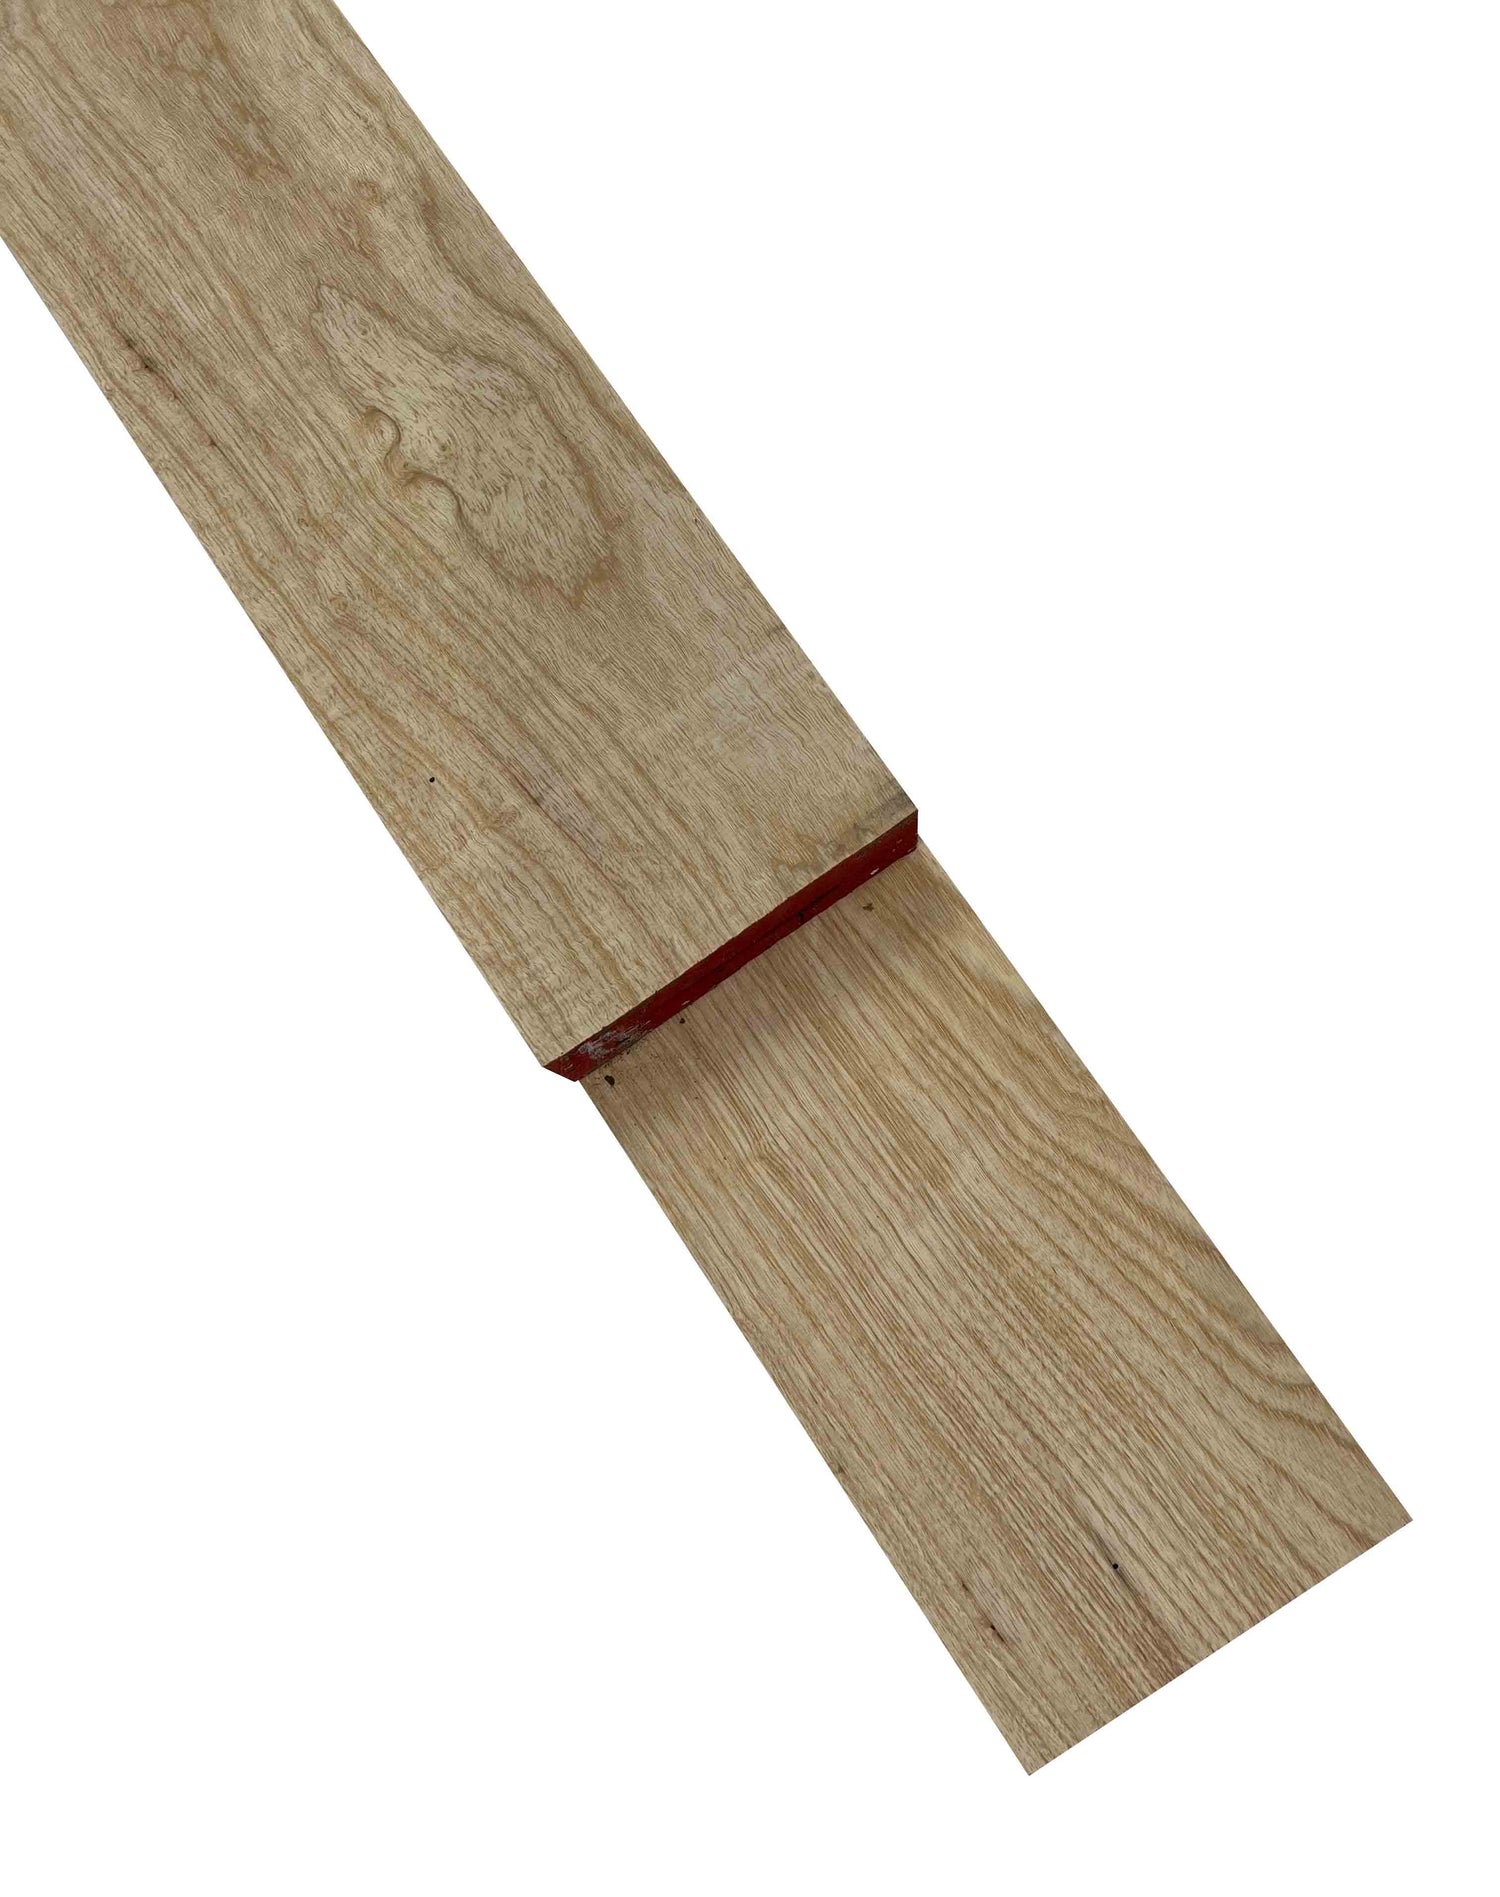 Premium American Hardwood 8/4 White Ash Lumber - Exotic Wood Zone - Buy online Across USA 